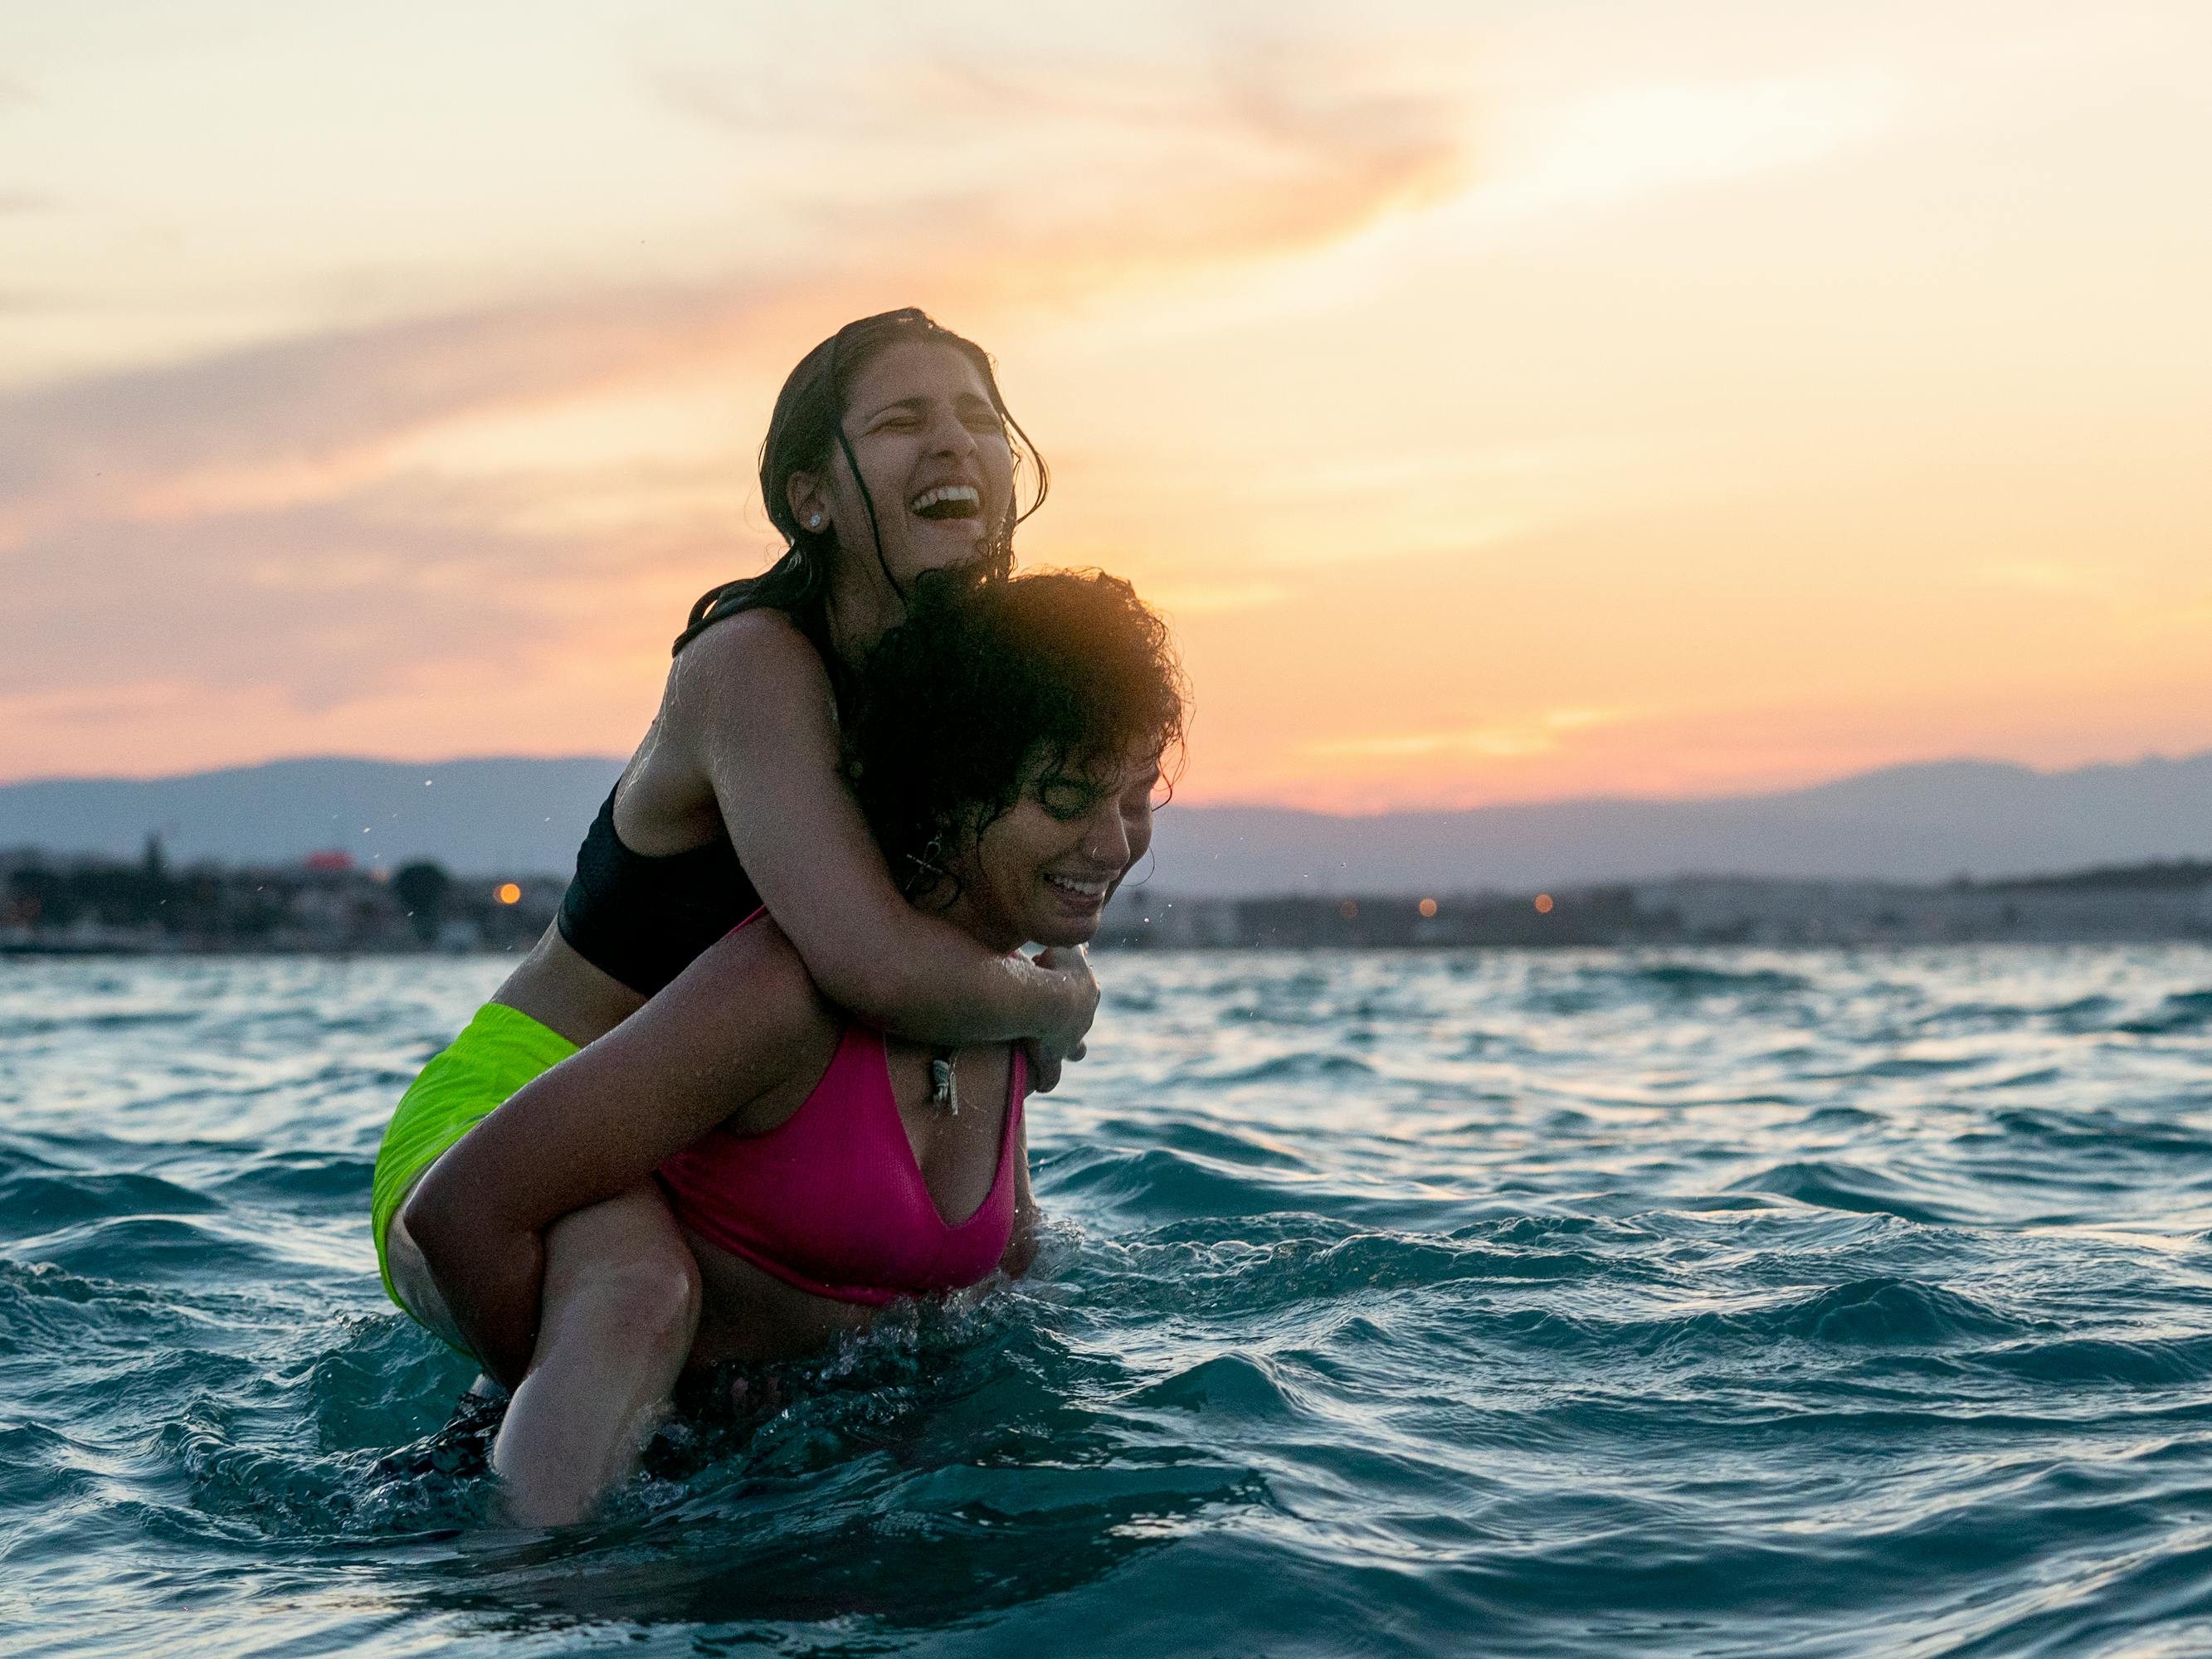 Yusra and Sarah Mardini laugh in this sunset-lit beach scene.